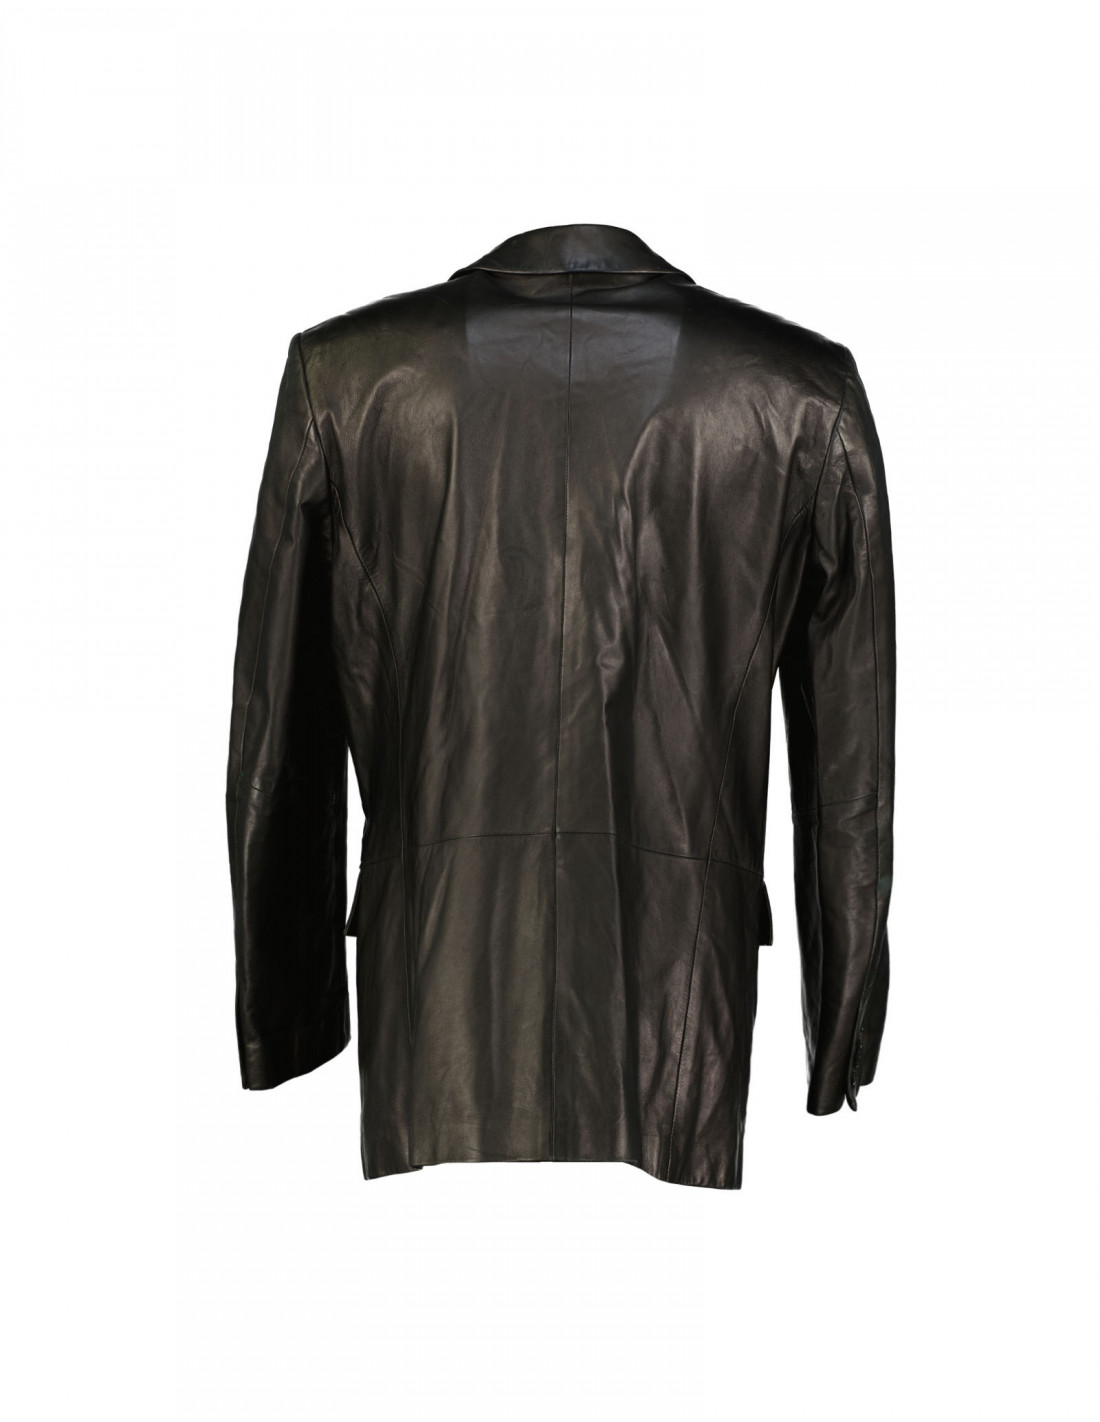 Hugo Boss men's real leather jacket